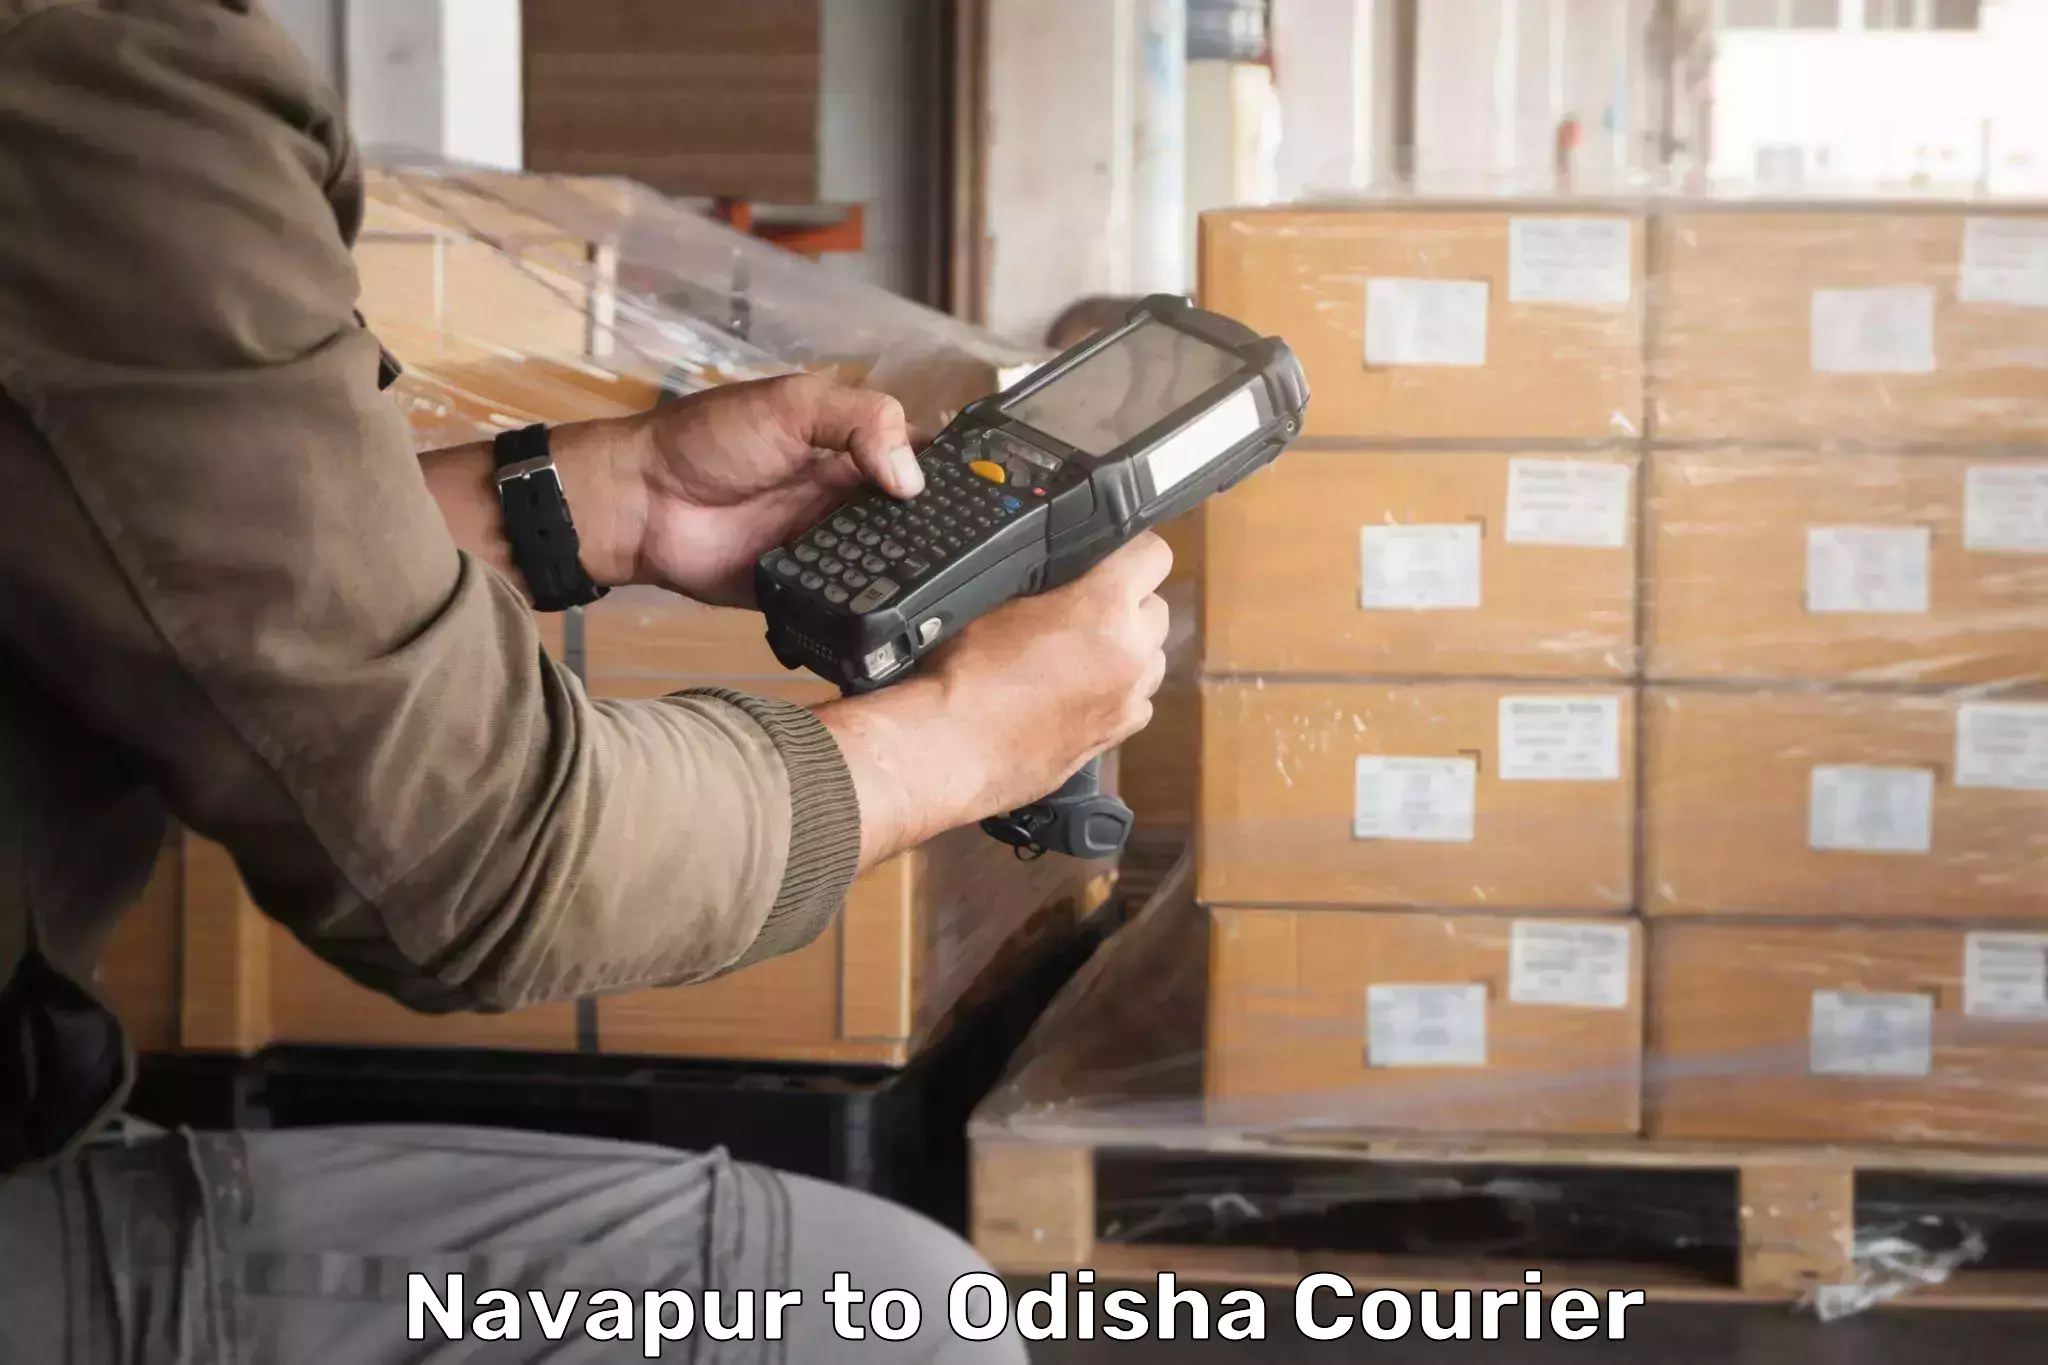 Bulk courier orders Navapur to Odisha